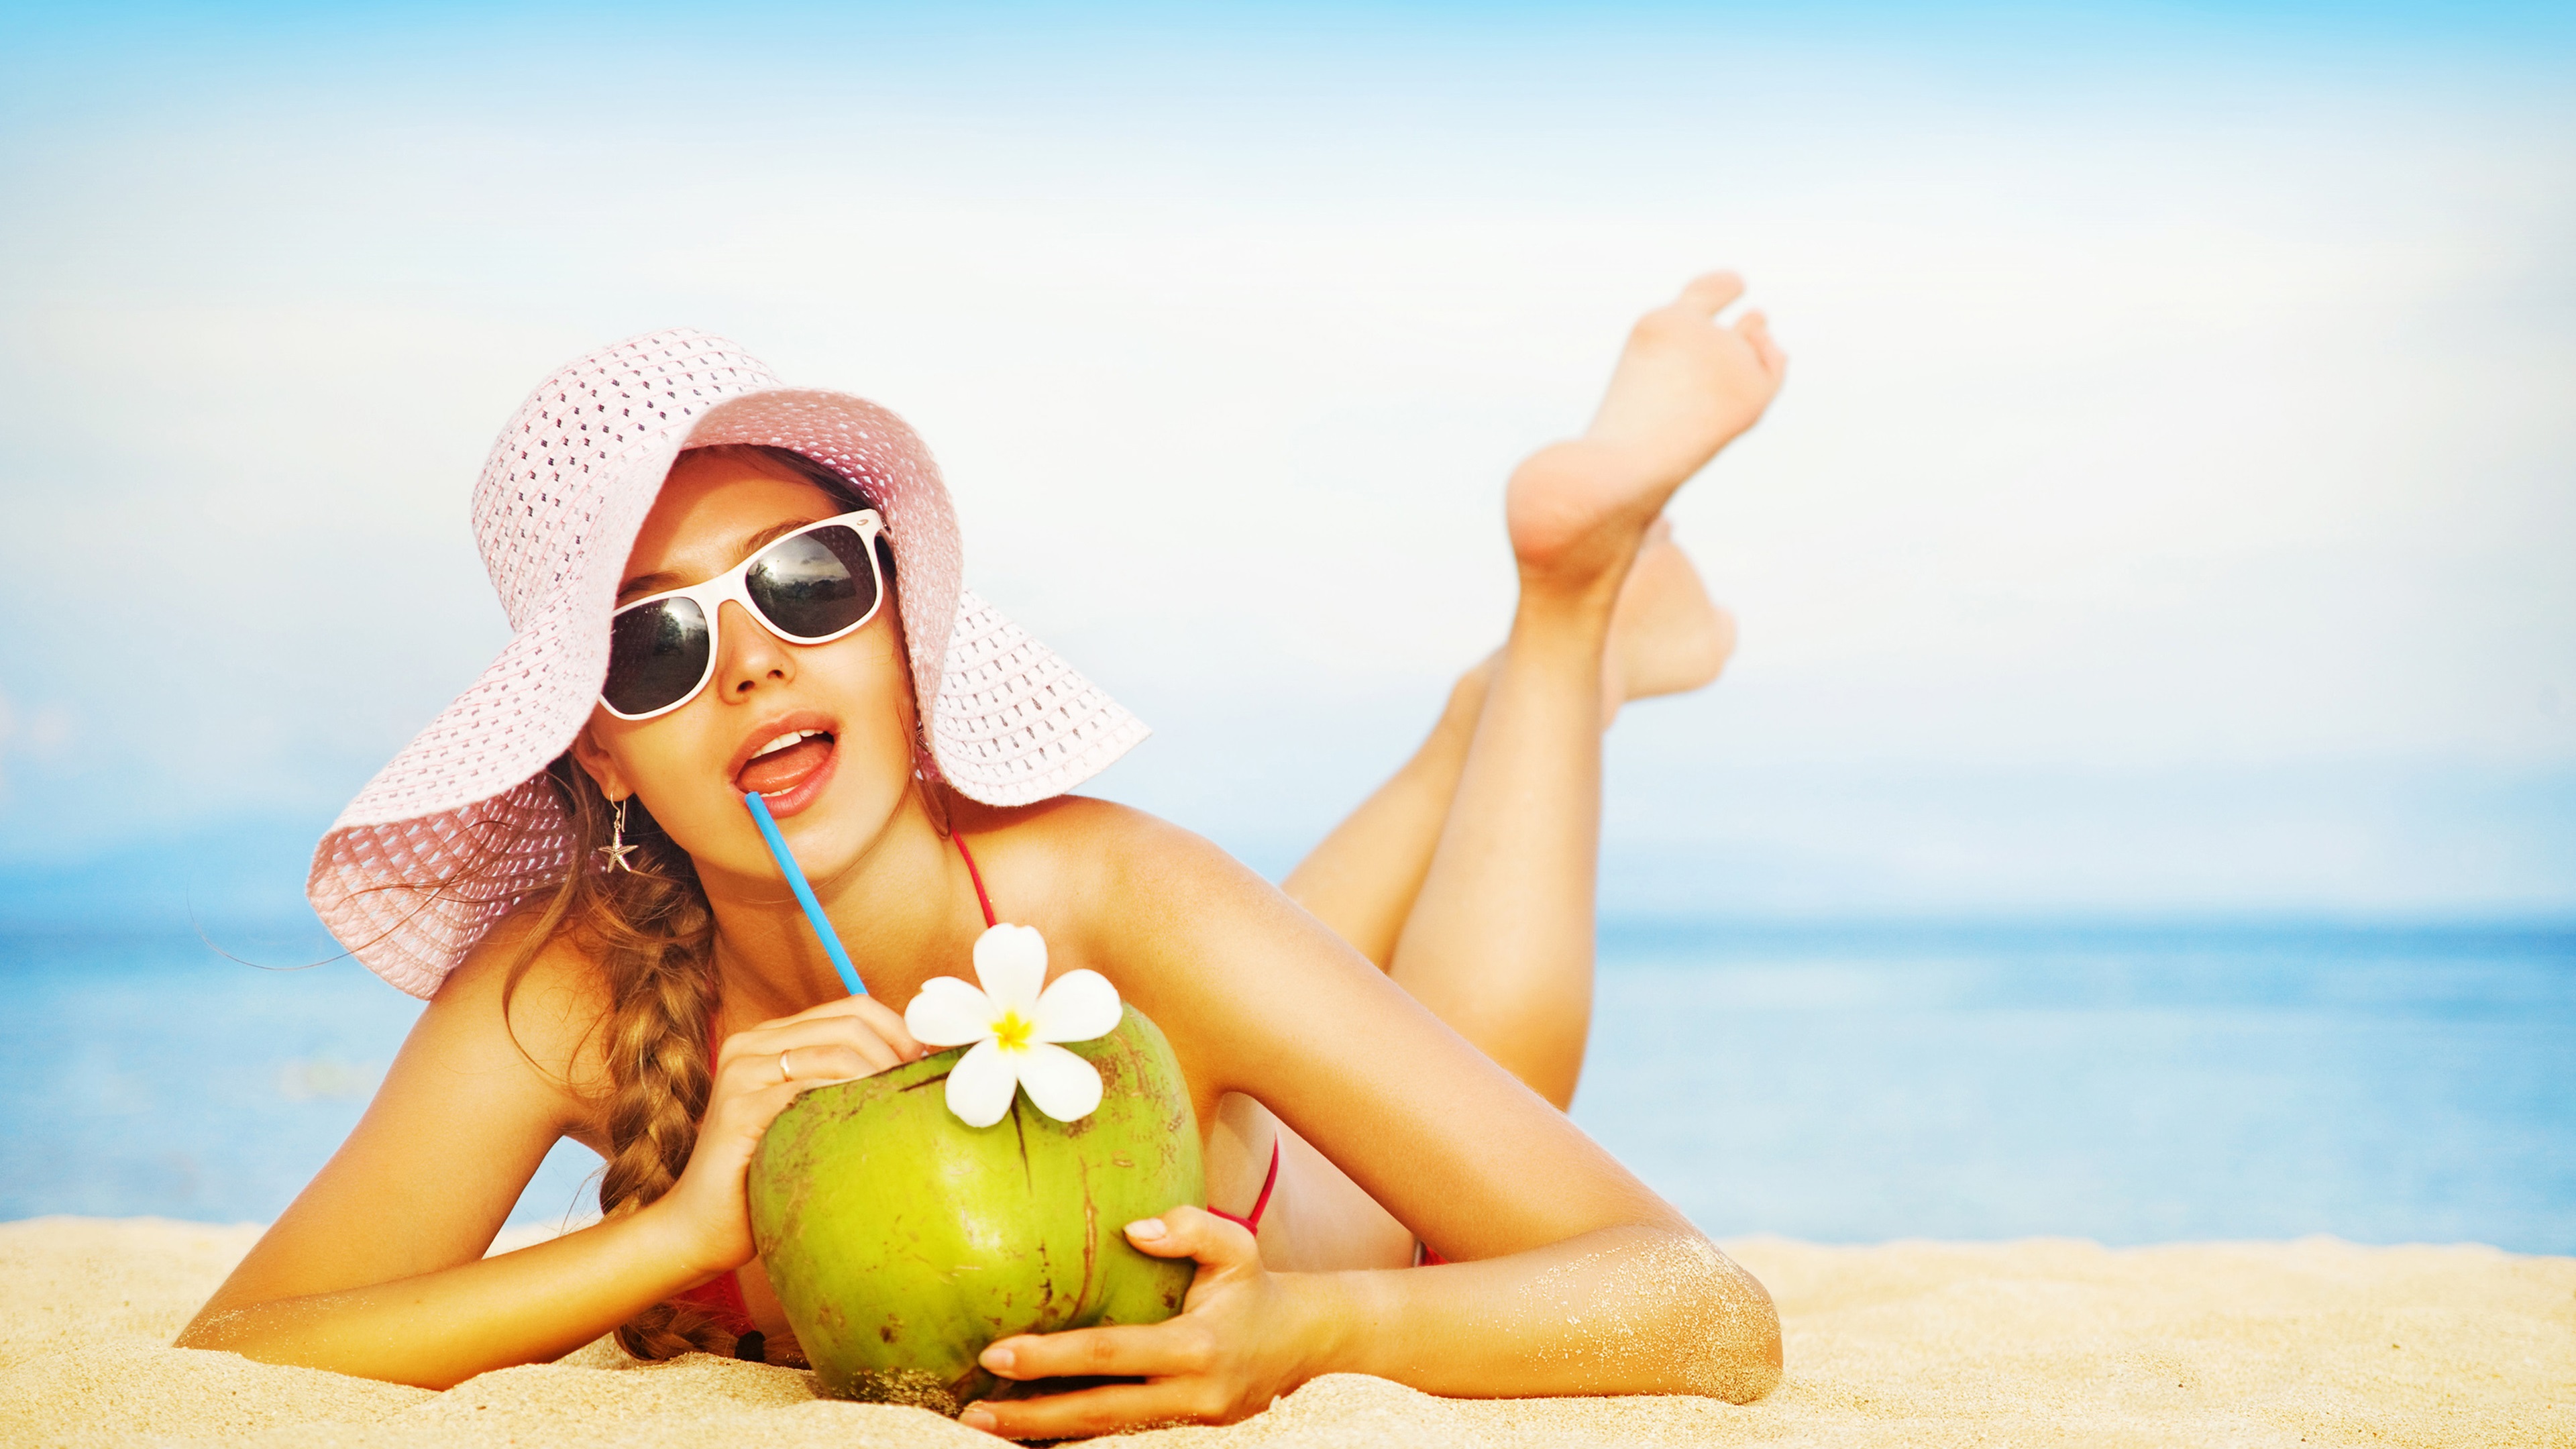 Download This Wallpaper - Chica En La Playa Con Coco , HD Wallpaper & Backgrounds